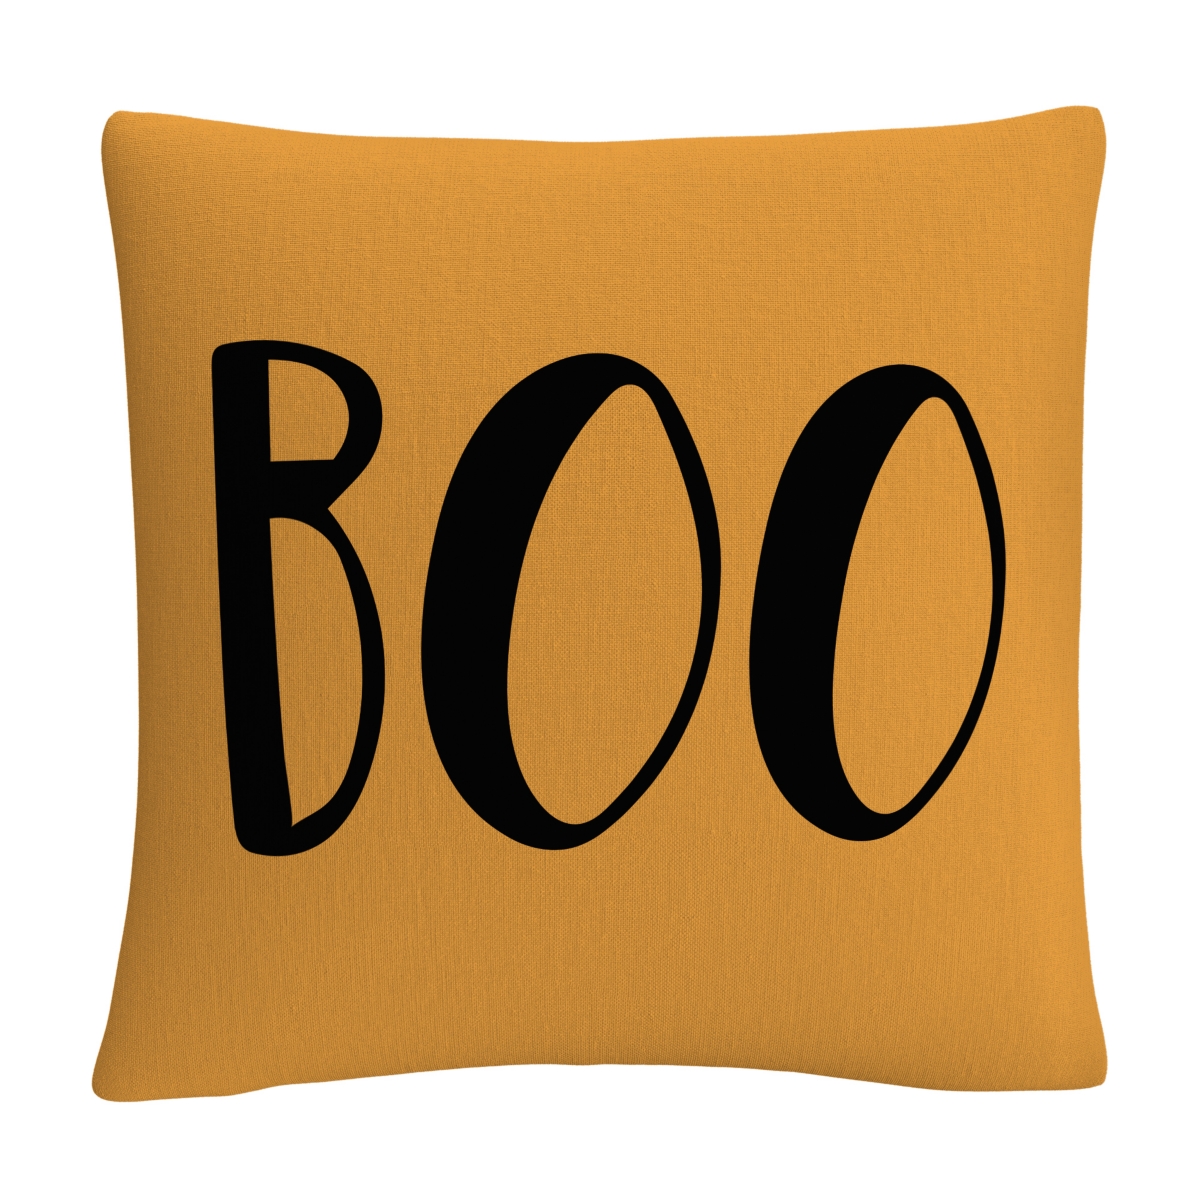 Abc Modern Contemporary Boo Script Decorative Pillow, 16 x 16